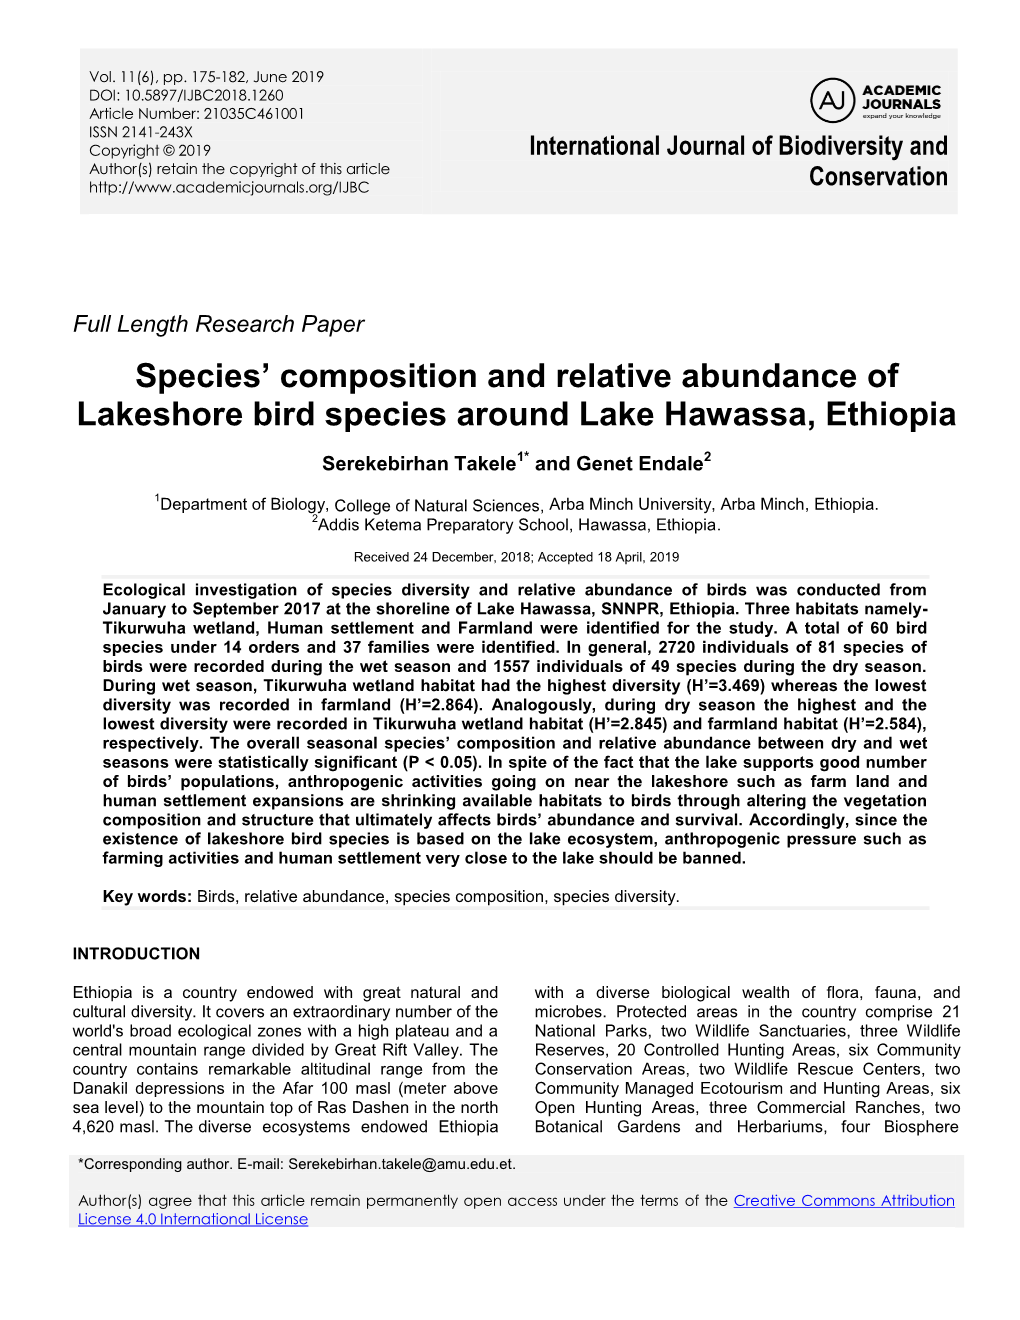 Species' Composition and Relative Abundance of Lakeshore Bird Species Around Lake Hawassa, Ethiopia